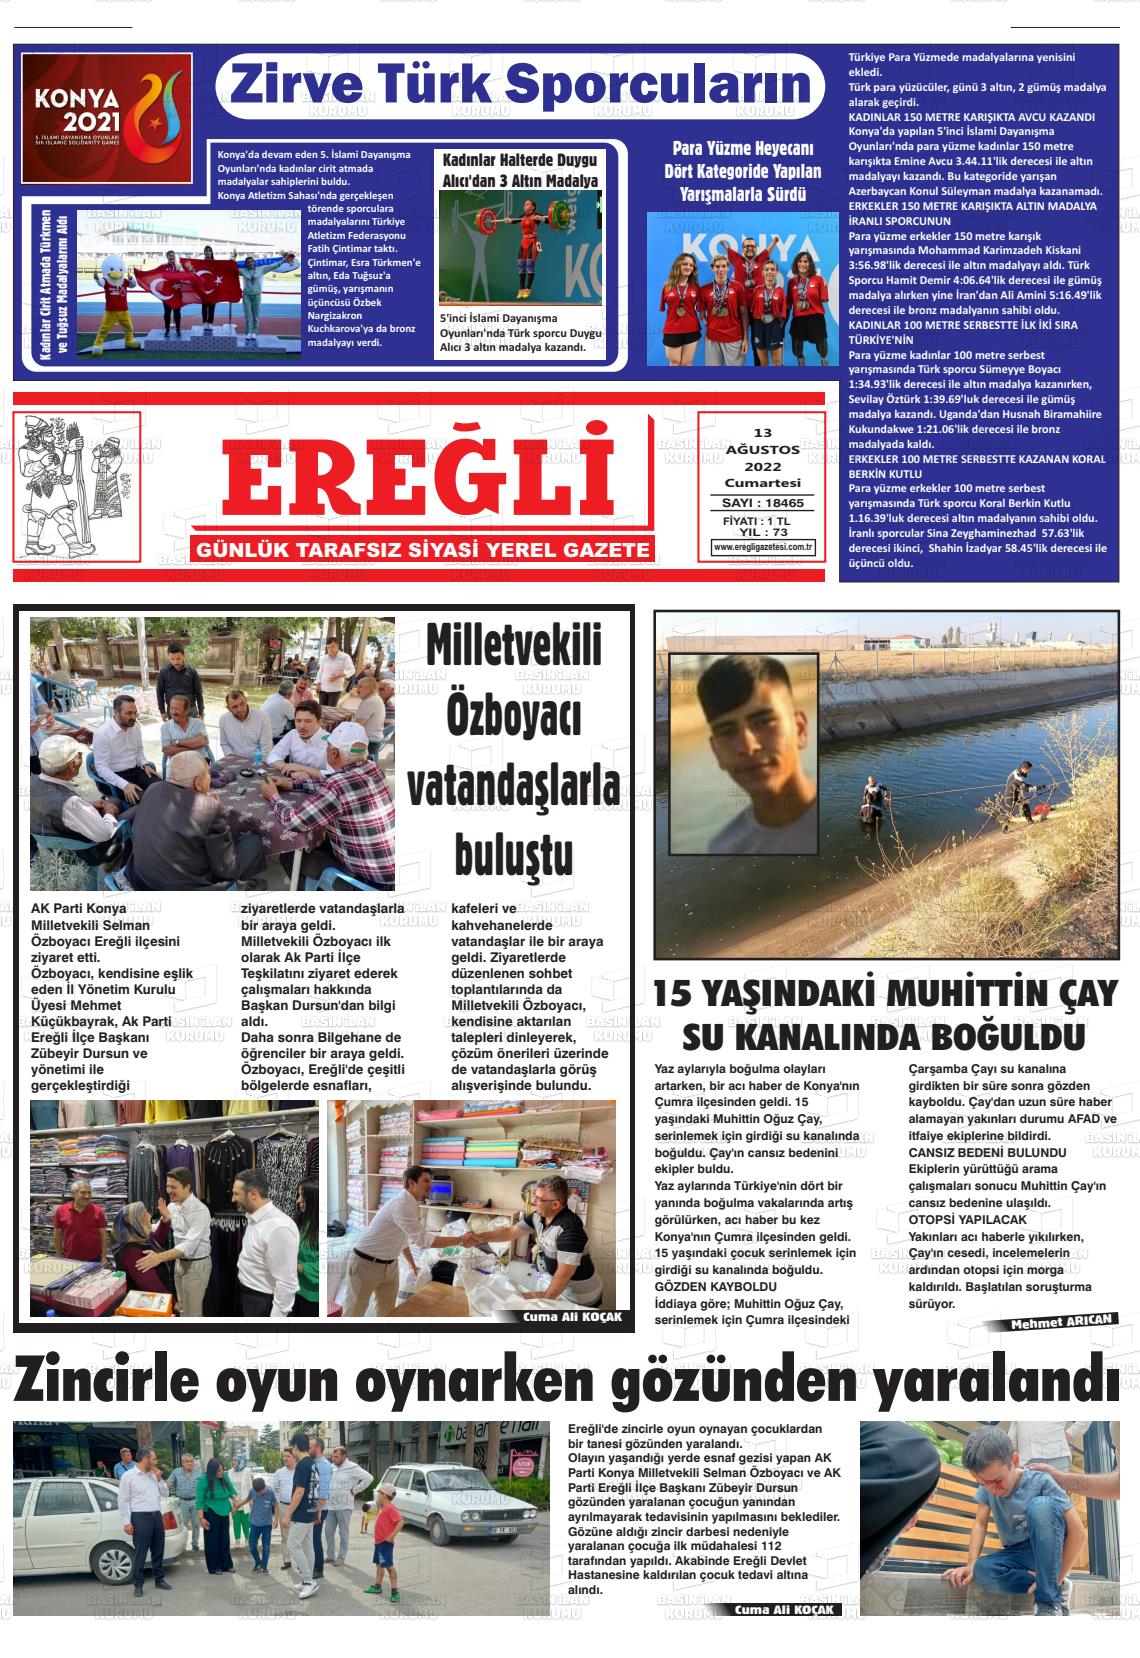 13 Ağustos 2022 Ereğli Gazete Manşeti